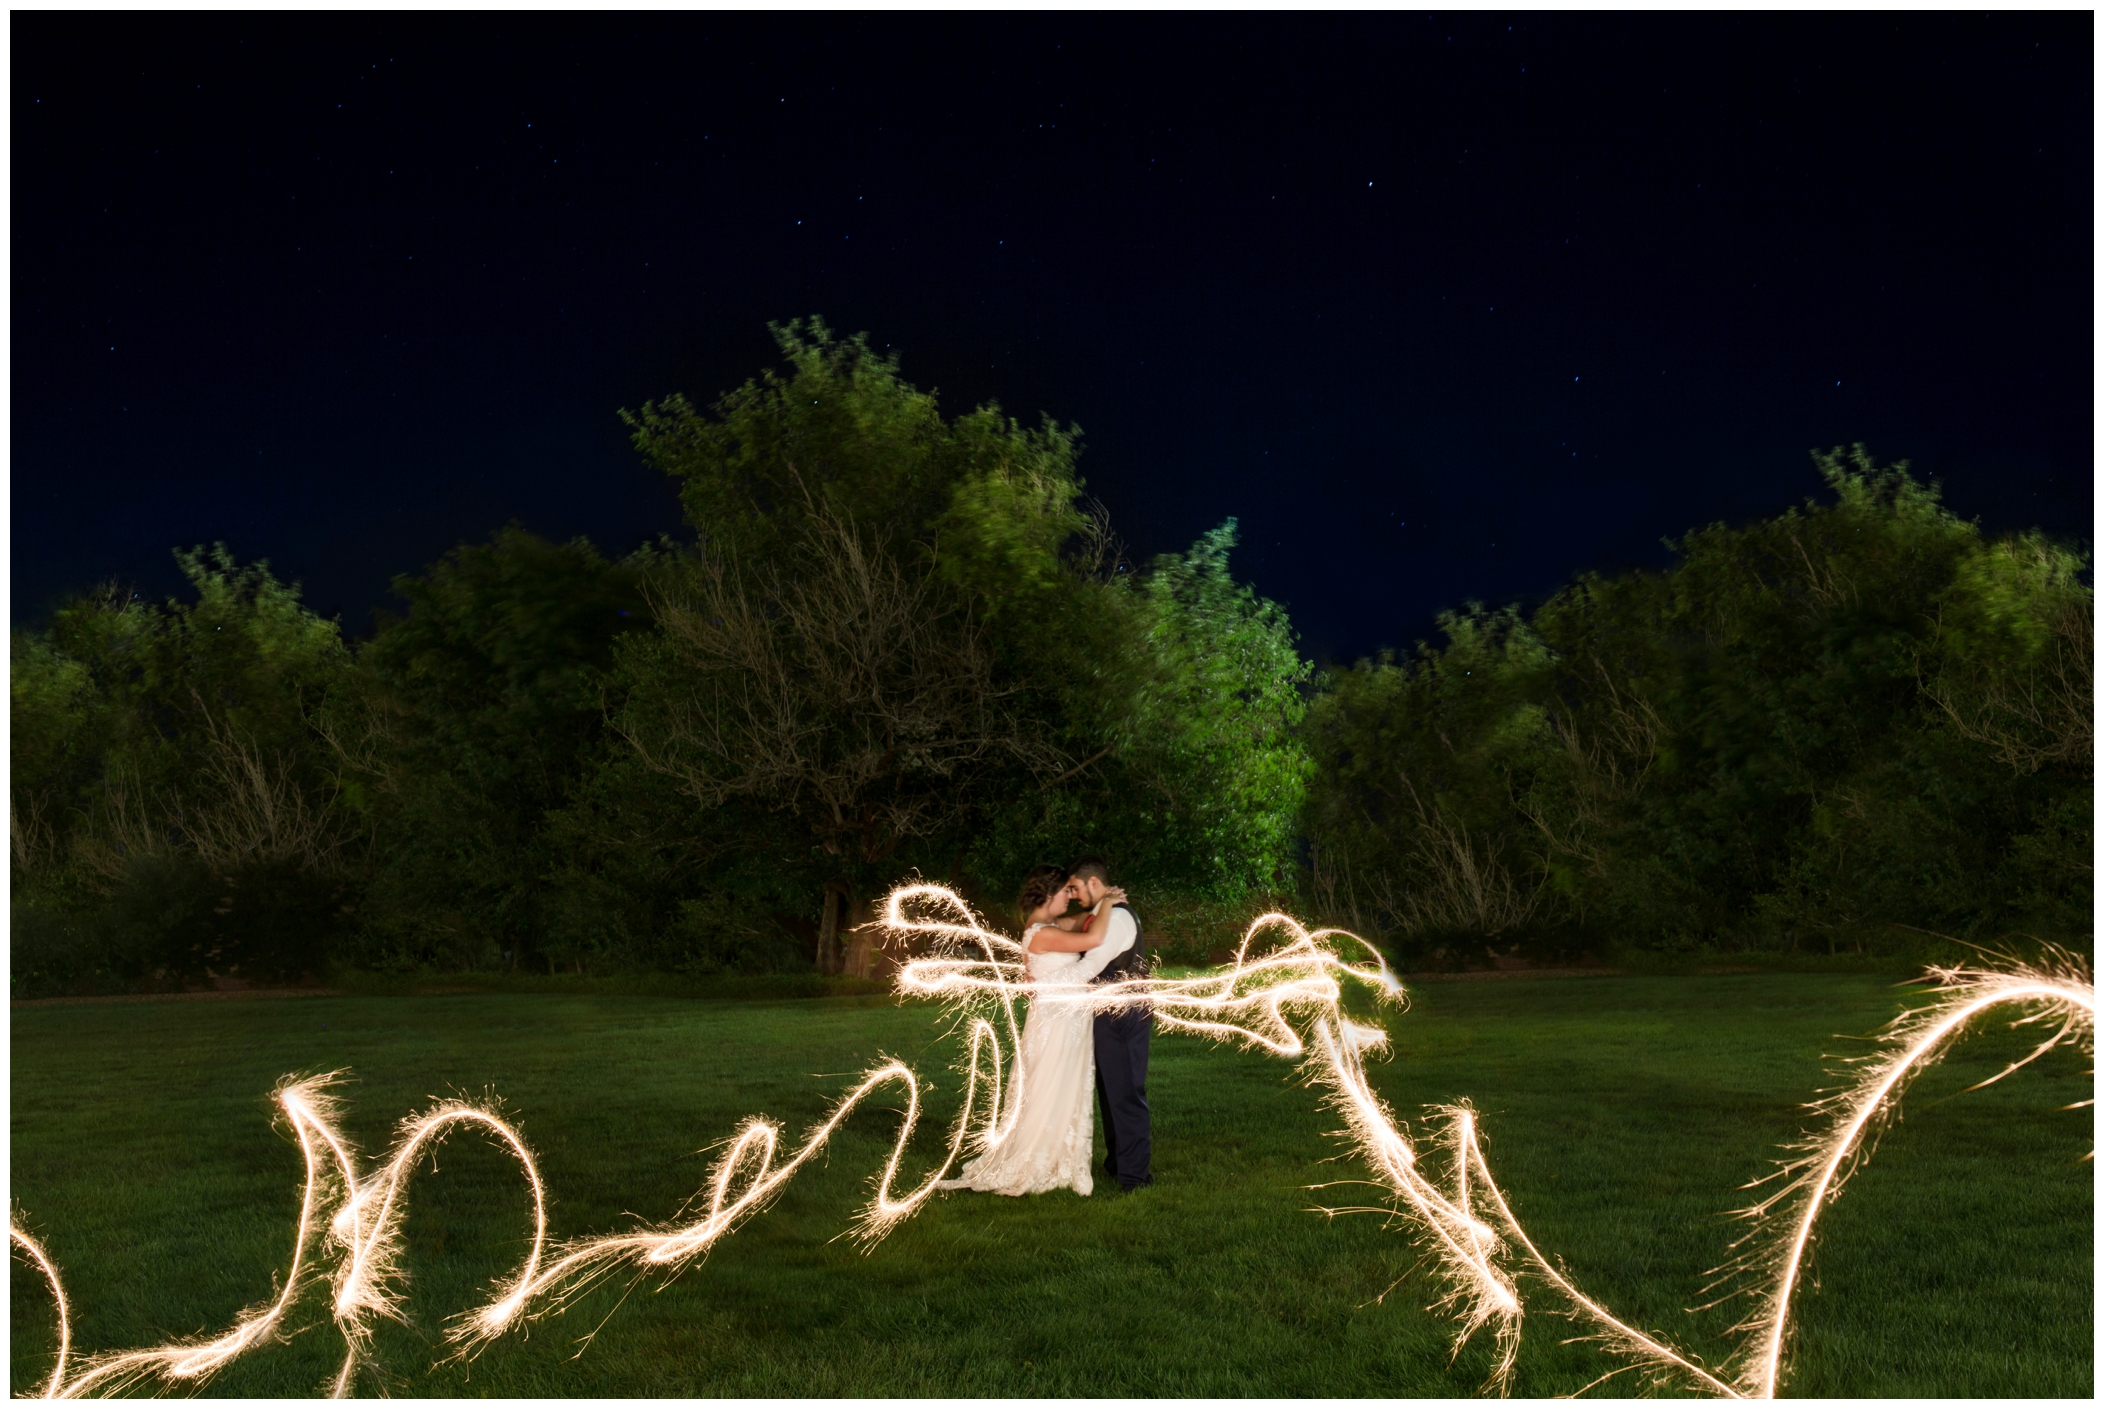 Colorado nighttime sparkler wedding pictures 